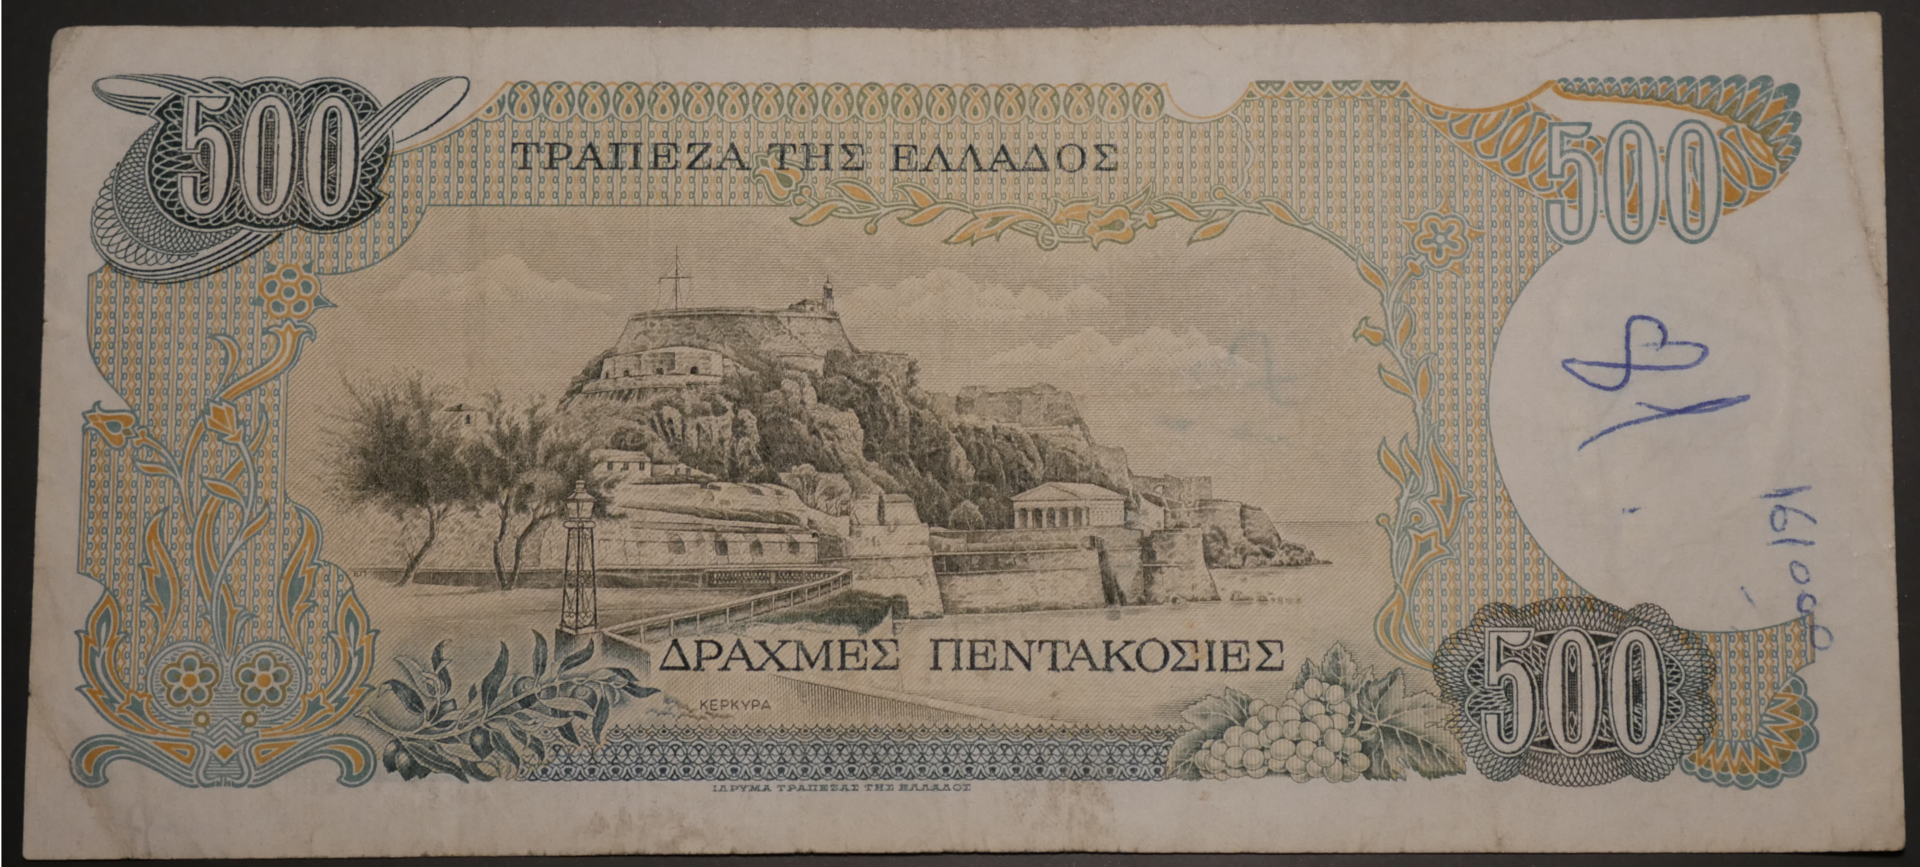 Greece_1983_500Dracma_02.png